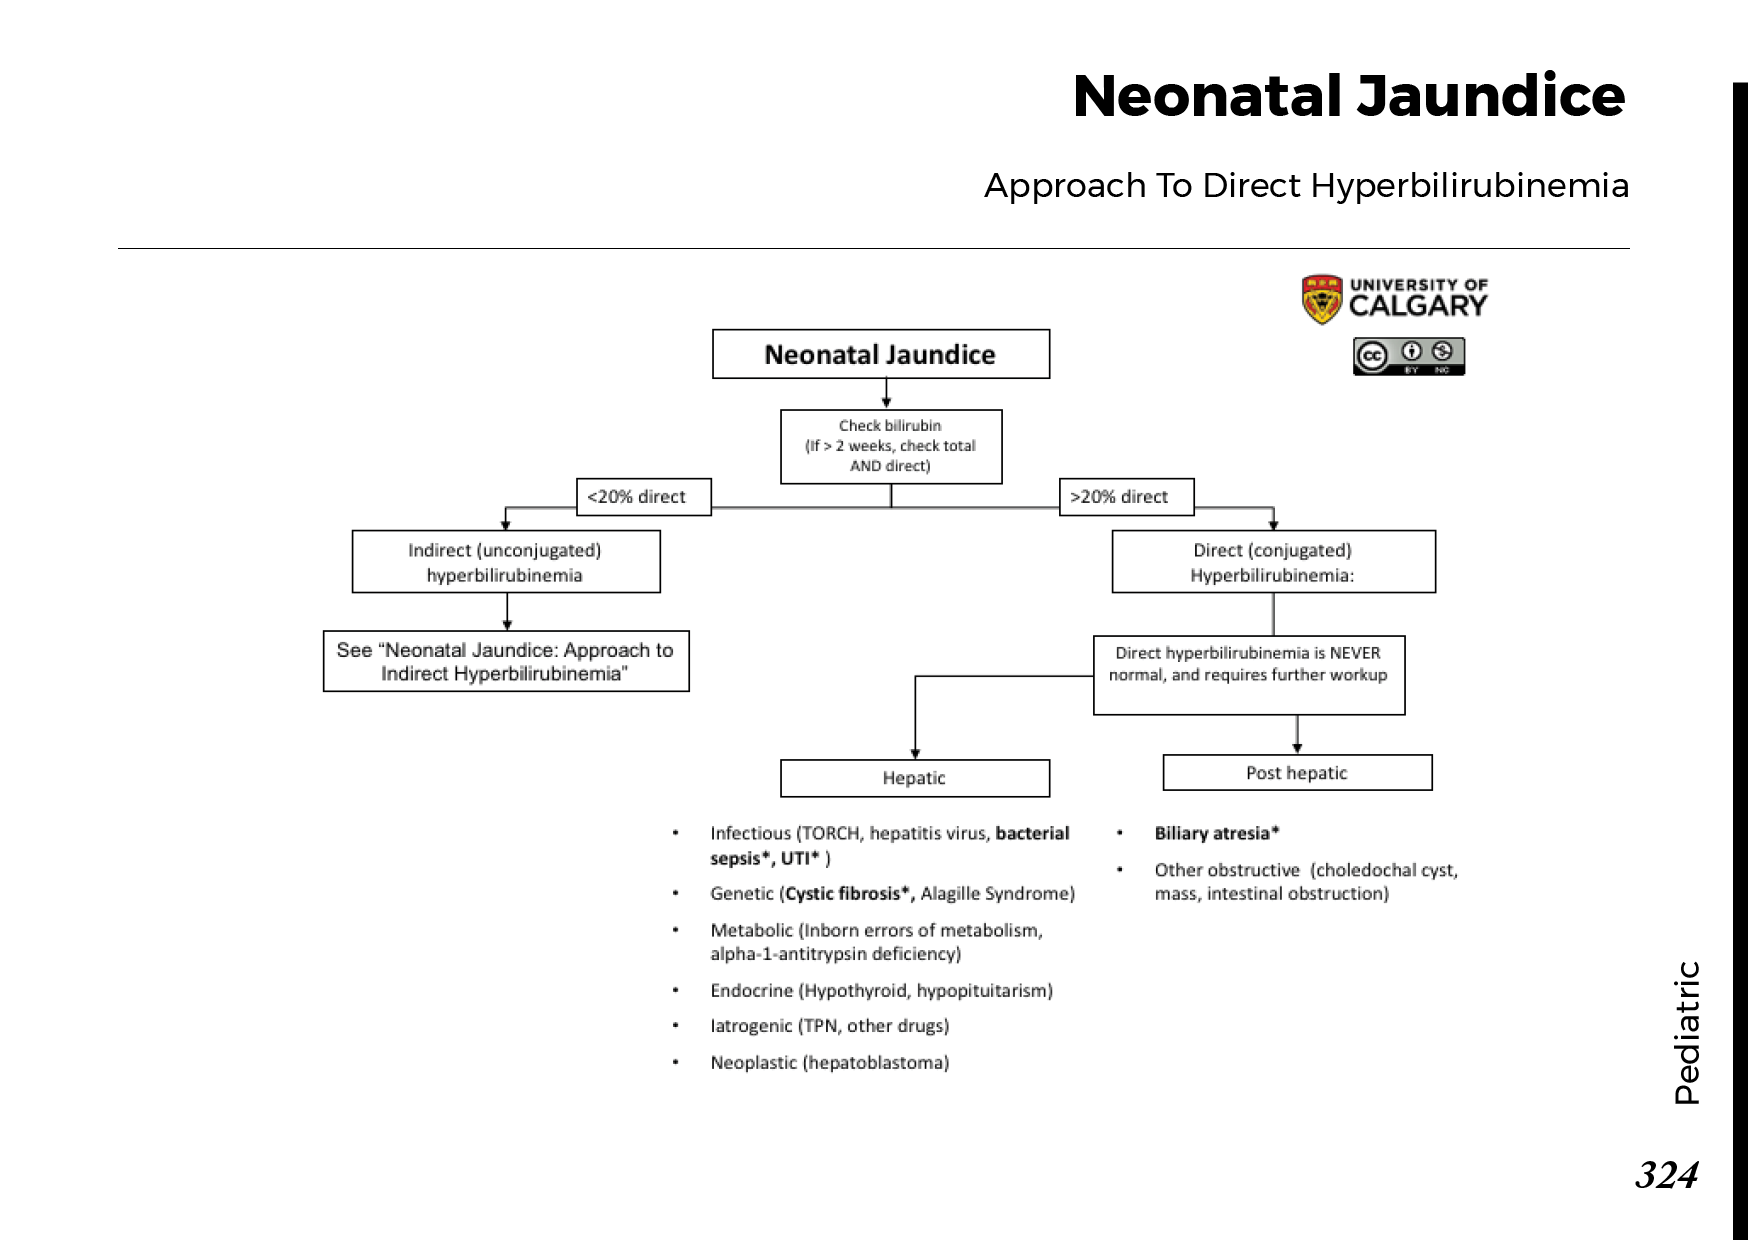 NEONATAL JAUNDICE: Approach To Direct Hyperbilirubinemia Scheme